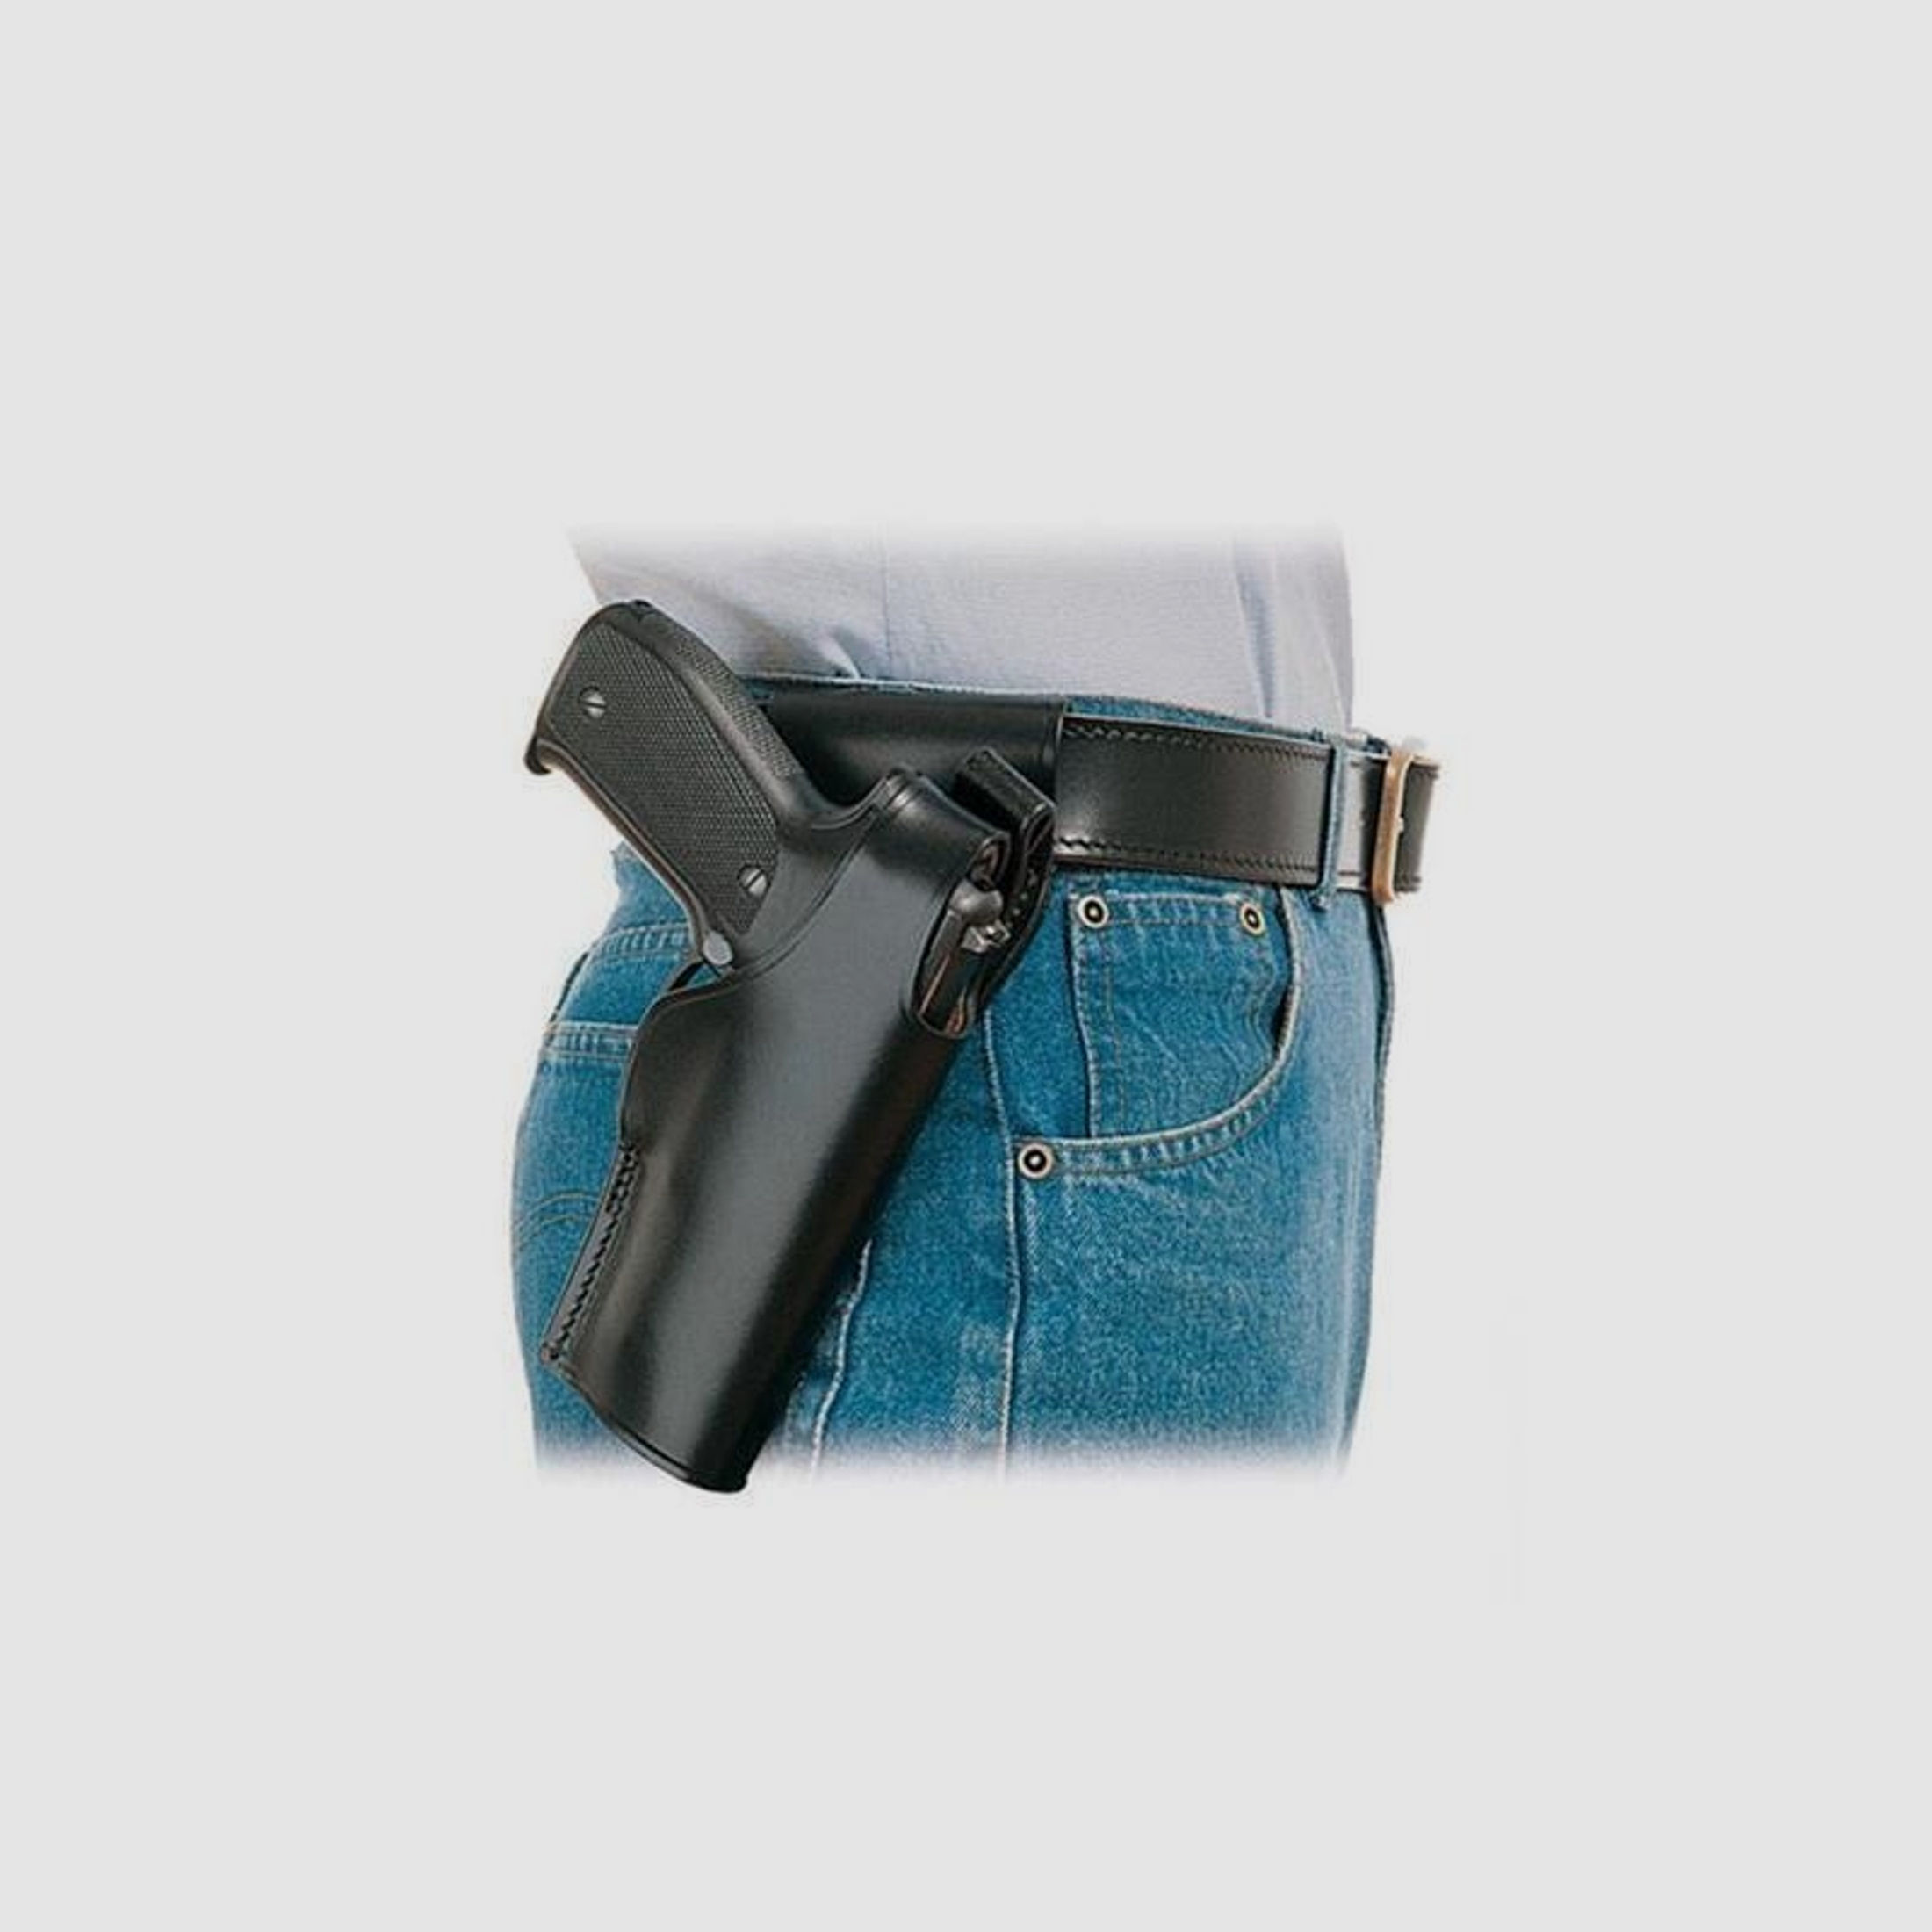 Gürtelholster SPITFIRE Glock 34/35 Schwarz Rechtshänder